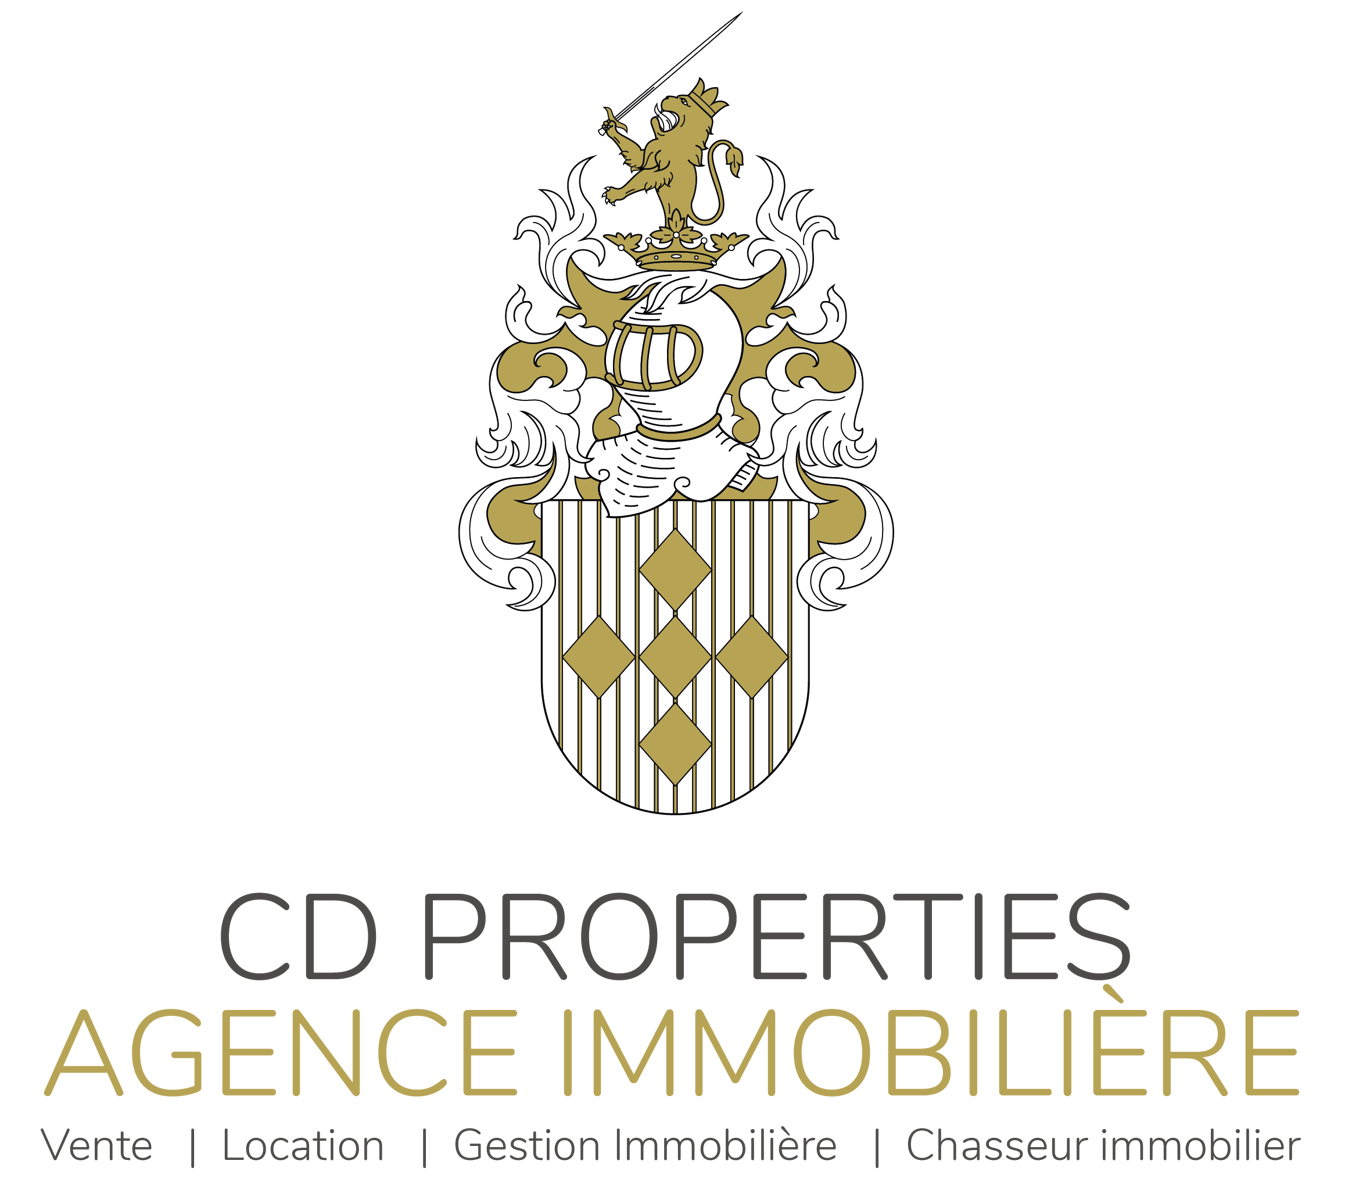 Penthouse te  koop in Oudergem 1160 1495000.00€ 3 slaapkamers m² - Zoekertje 20960